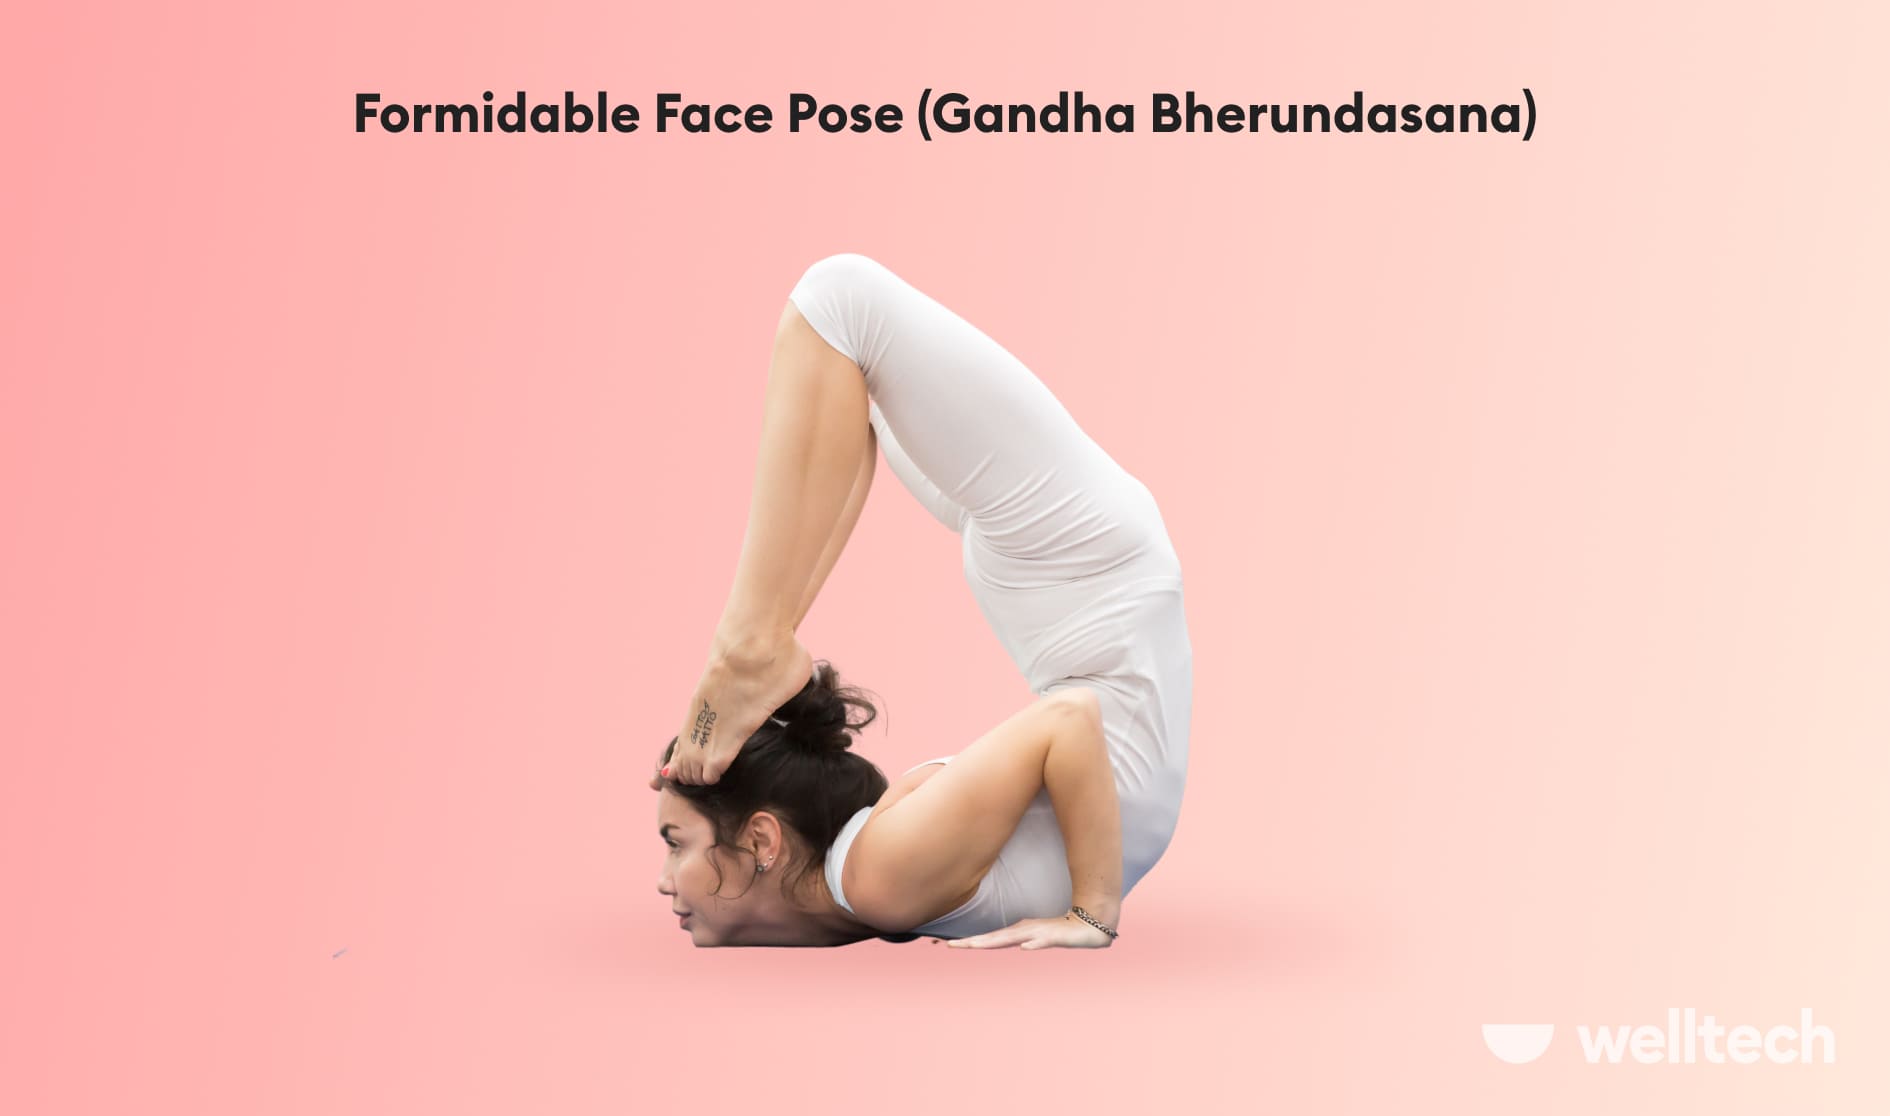 a woman is practicing Formidable Face Pose (Gandha Bherundasana)_crazy yoga poses